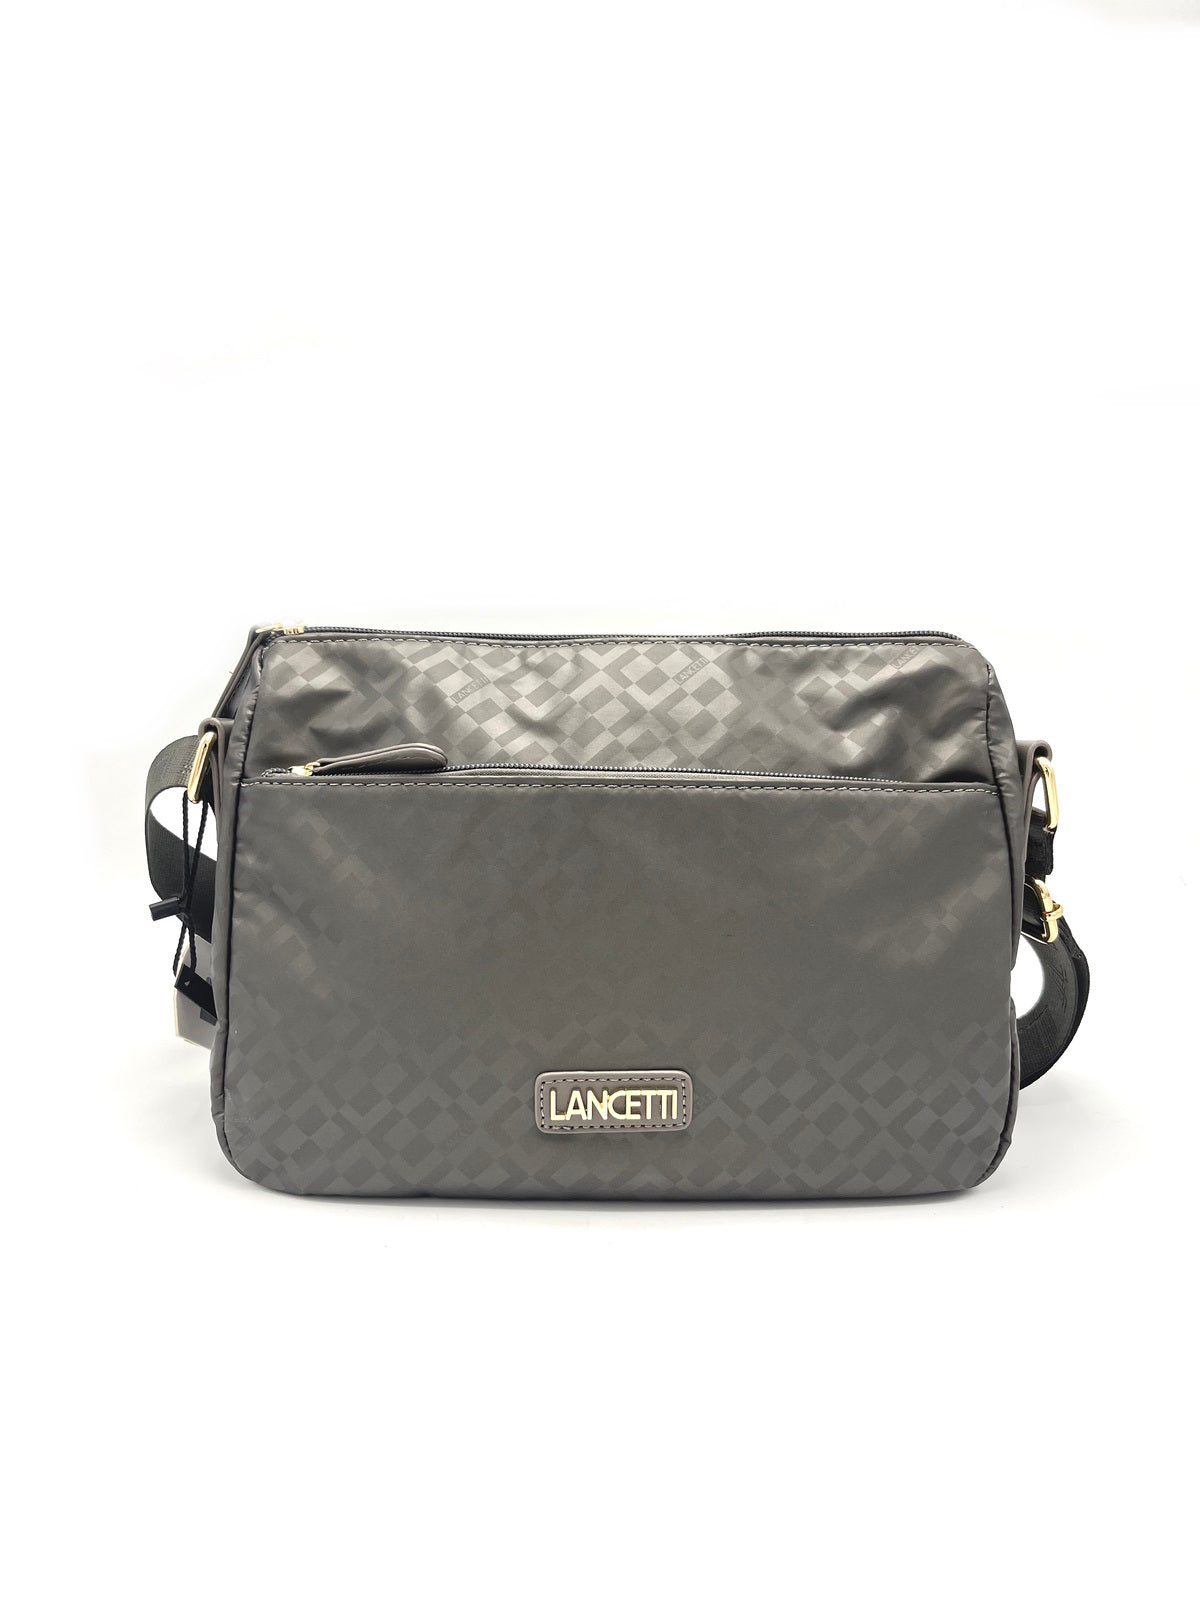 Shoulder bag, brand Lancetti, art. LL100-3.290